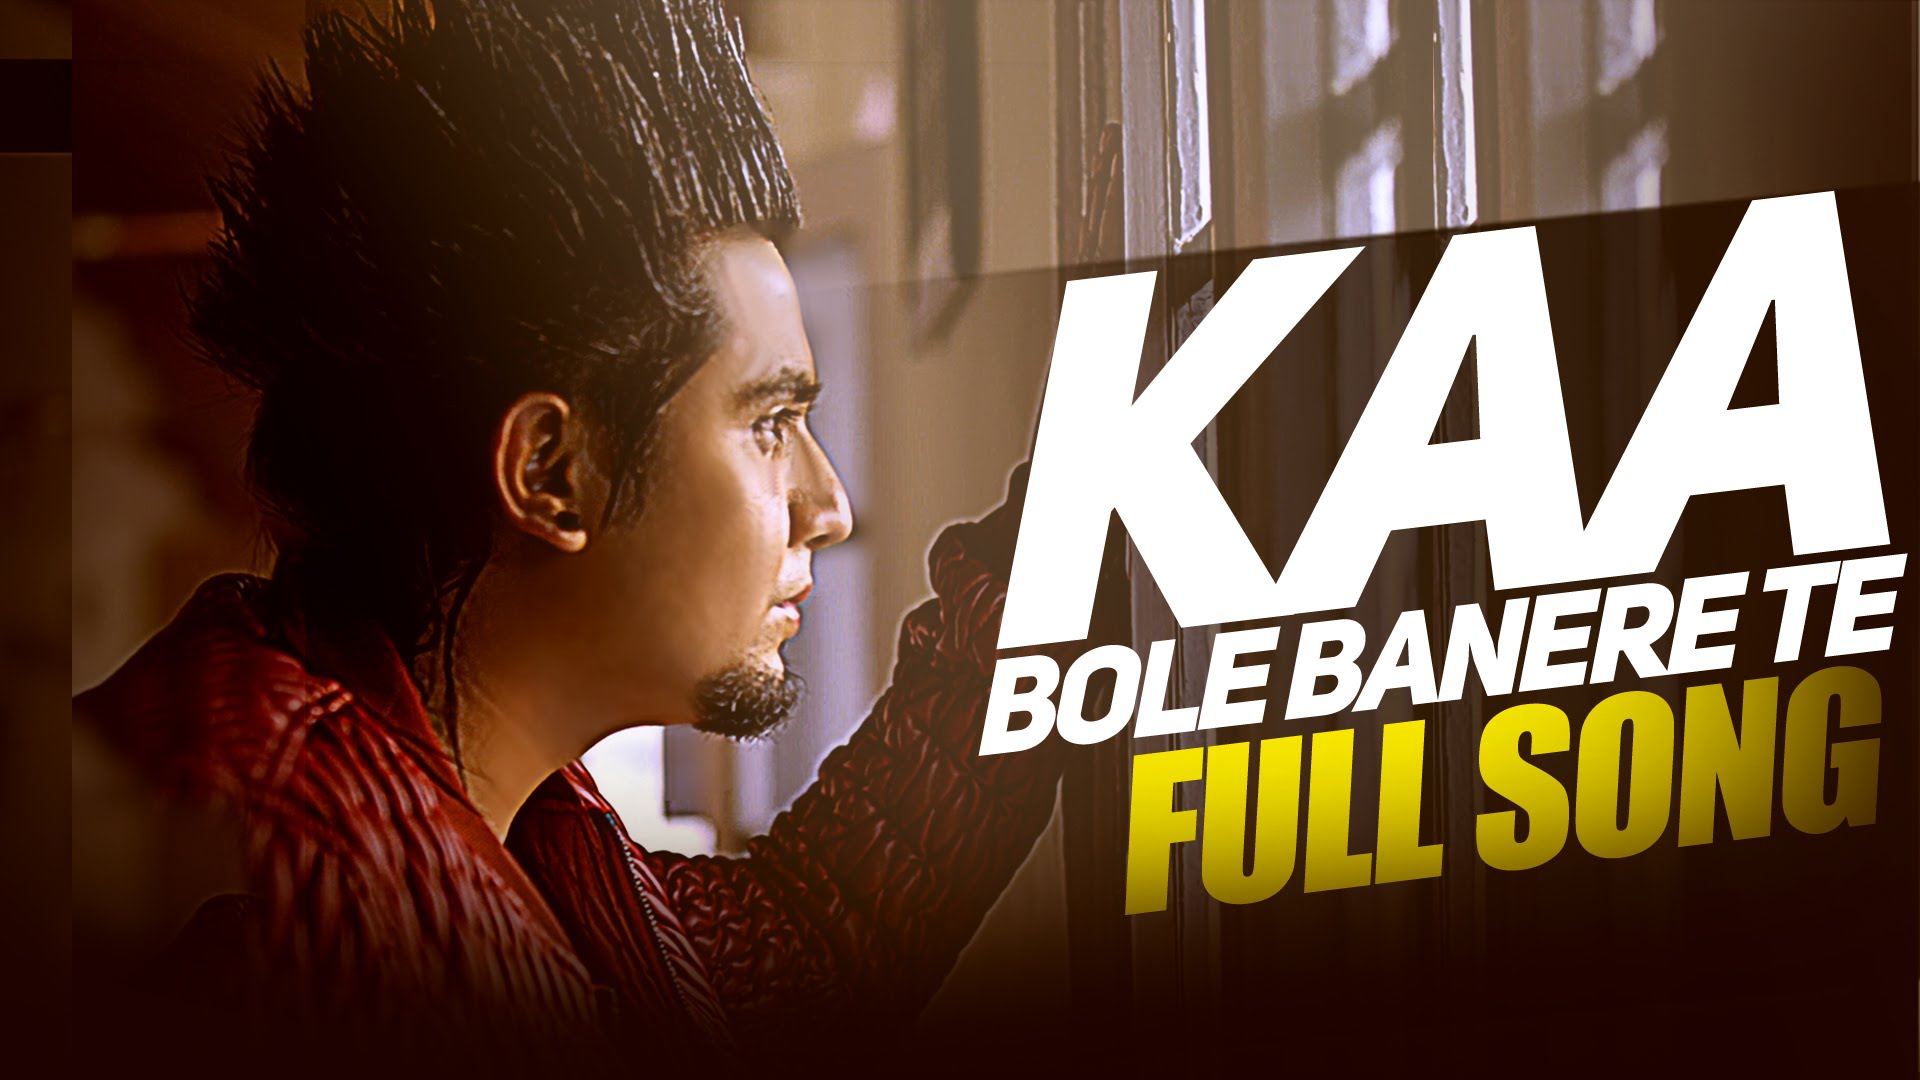 Kaa Bole Banere Te (Full Song) | A Kay | Latest Punjabi Song 2016 | Speed Records